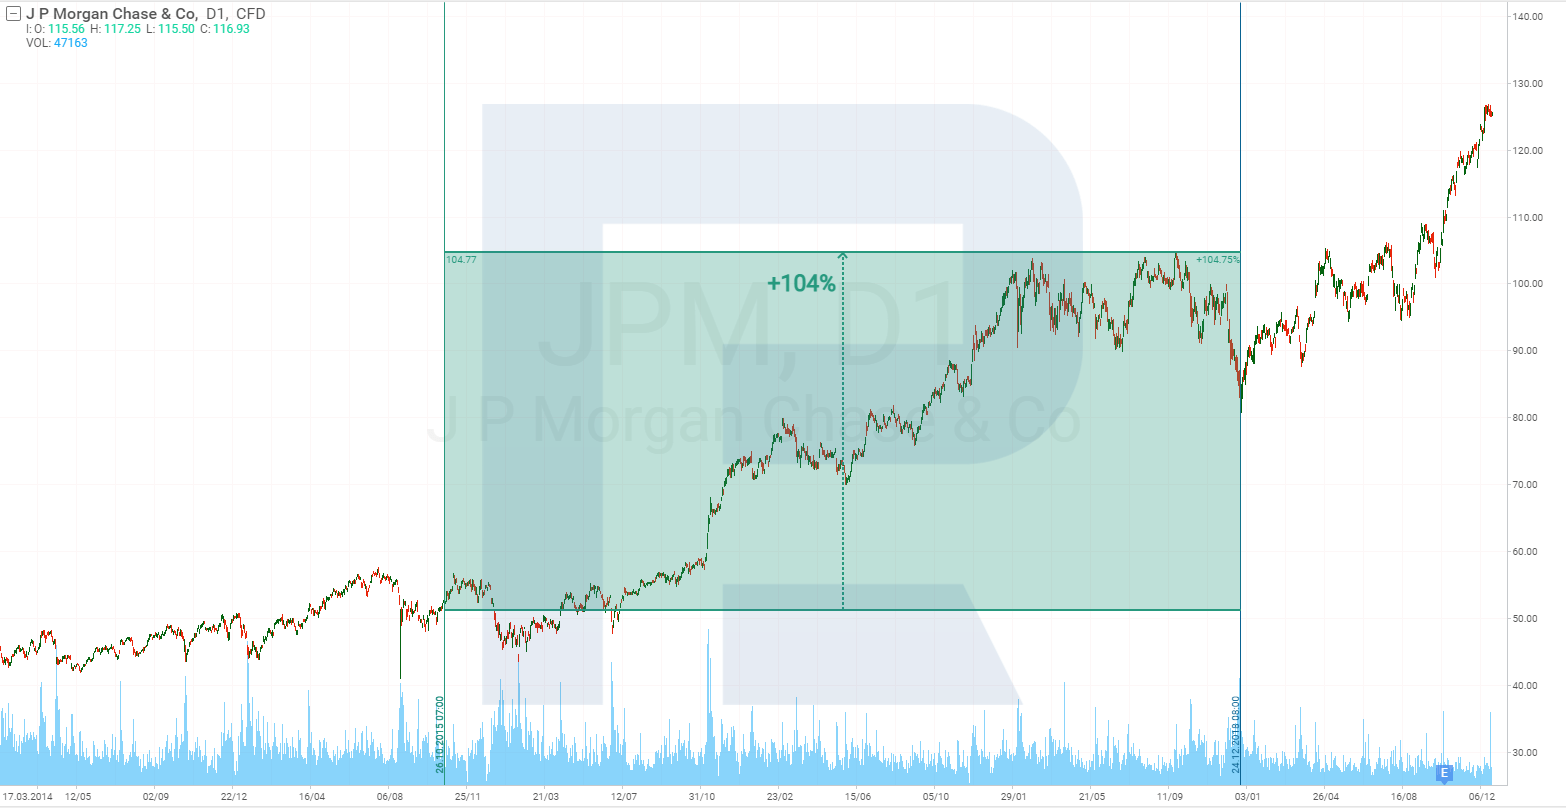 JPMorgan Chase & Co stock chart